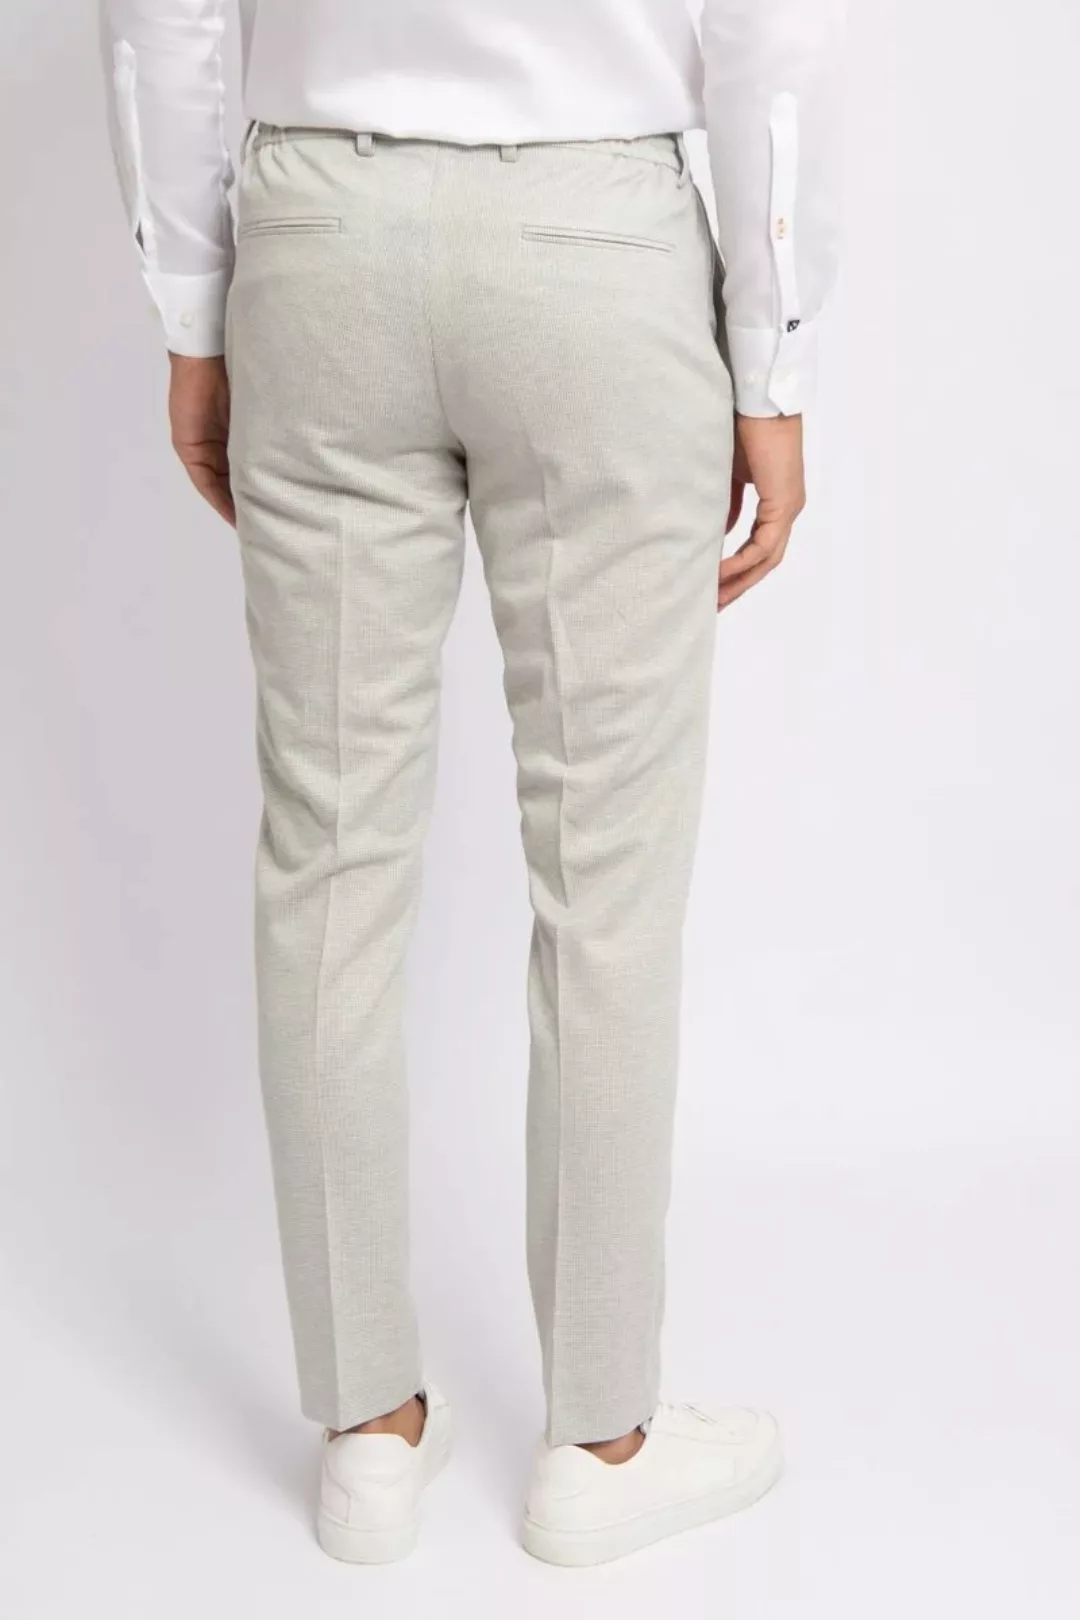 Suitable Dace Jersey Pantalon Hellgrün - Größe 48 günstig online kaufen